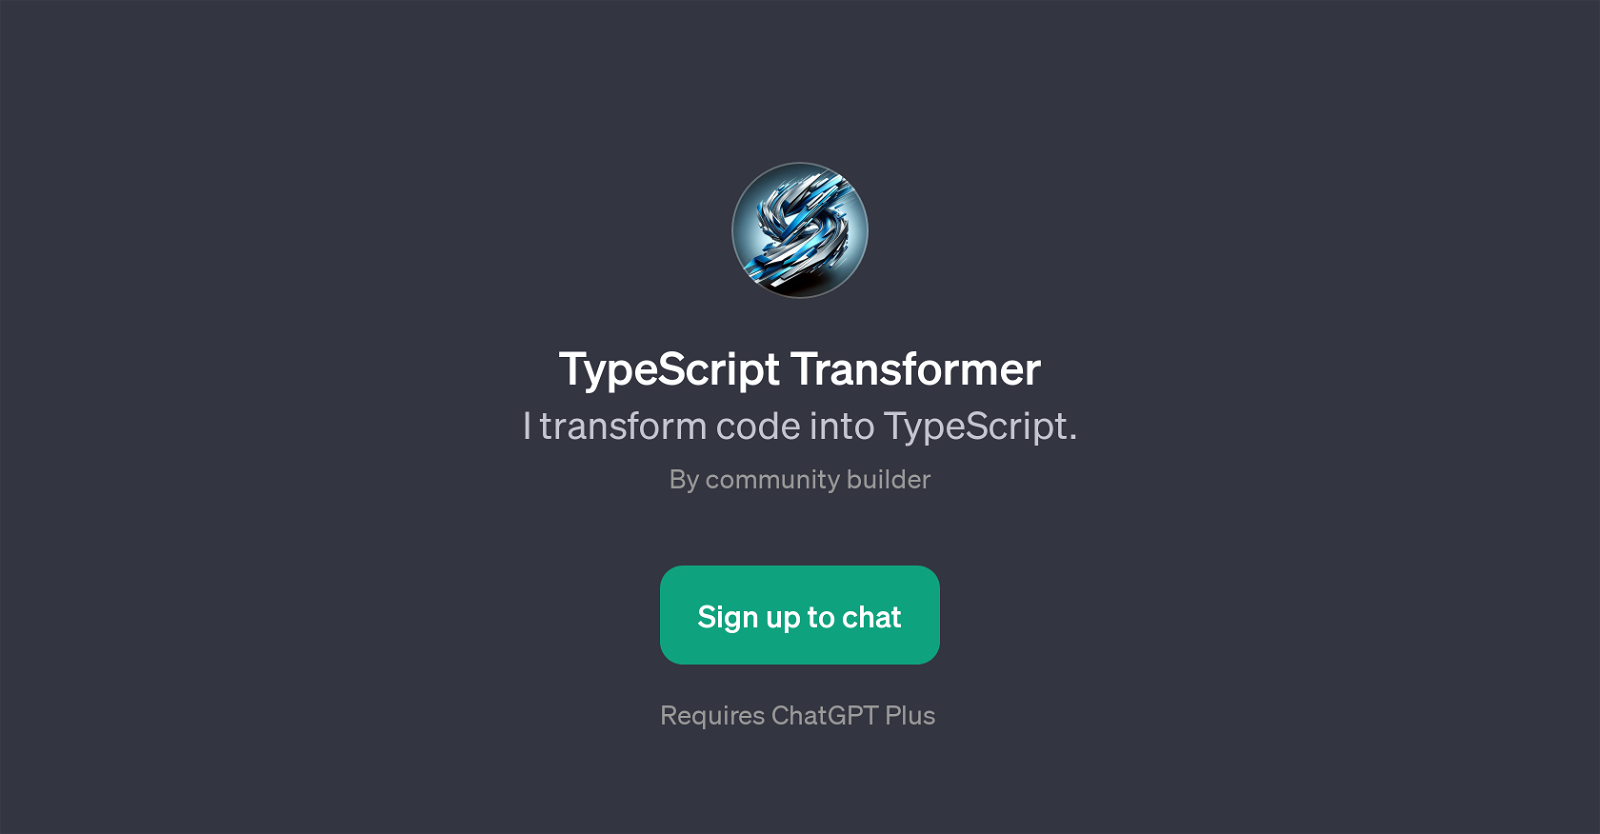 TypeScript Transformer website